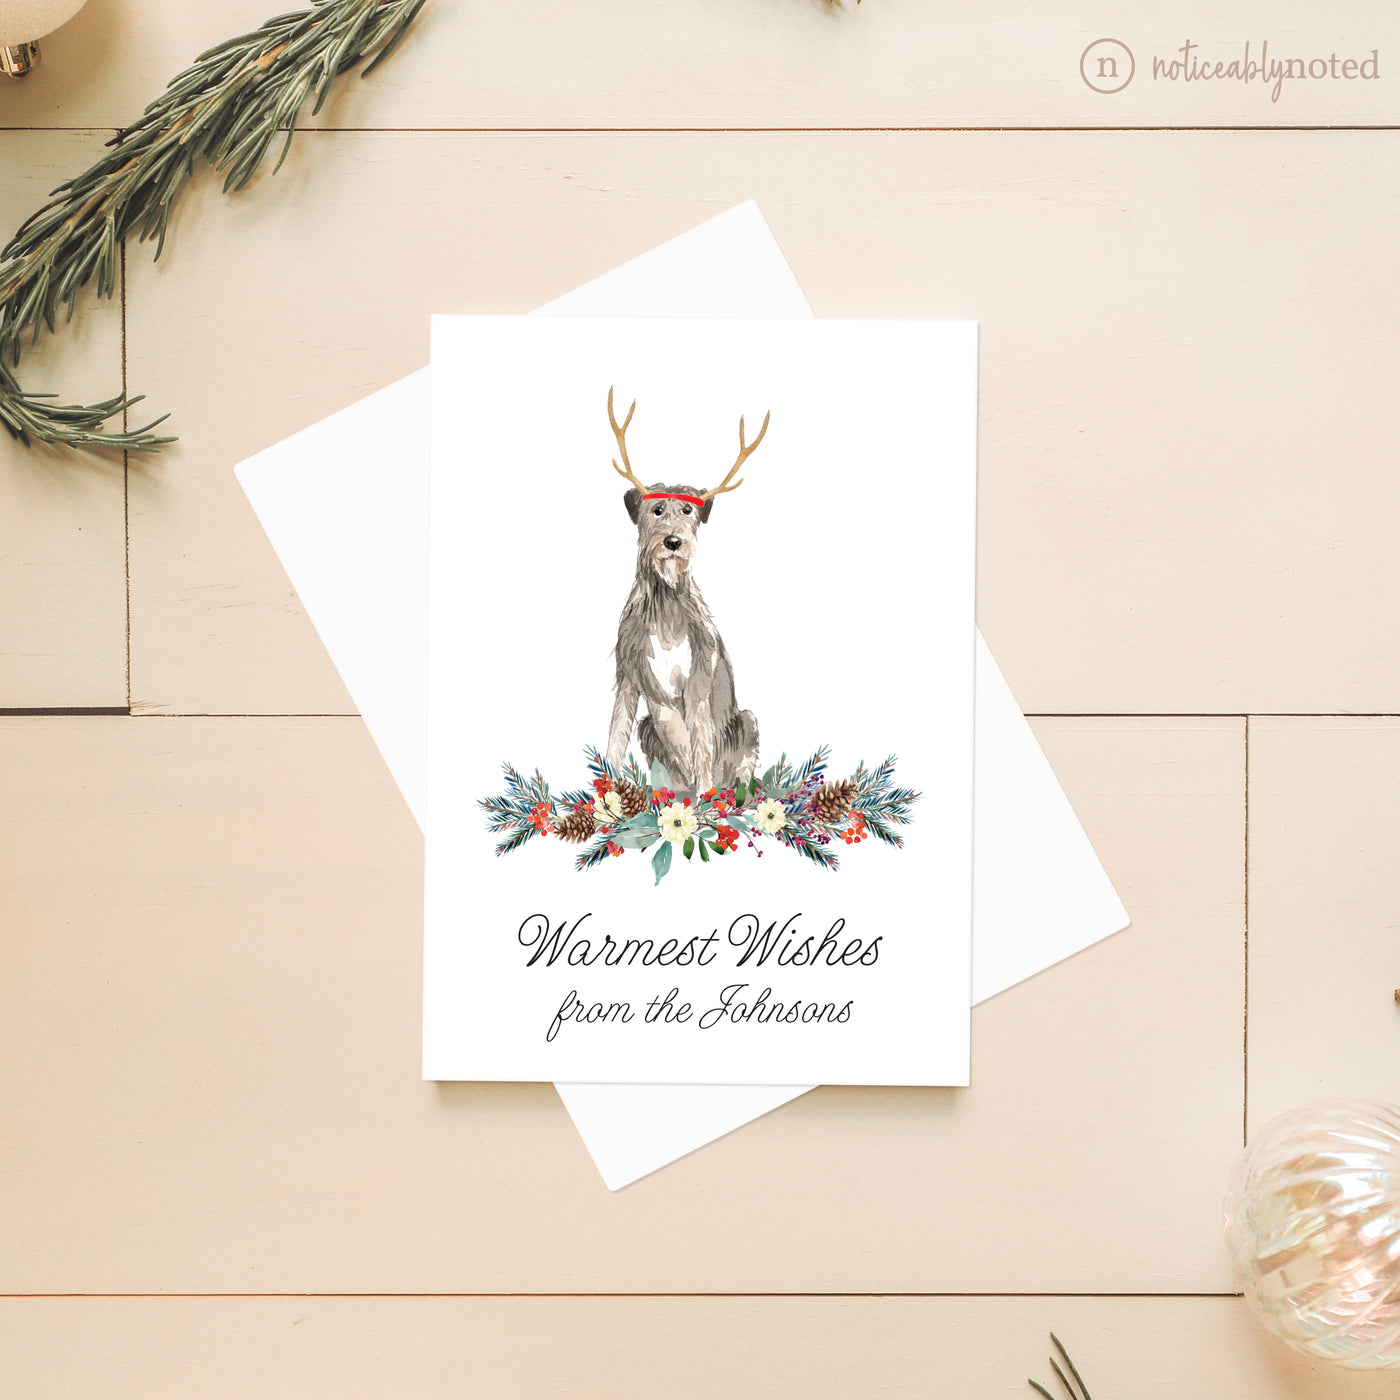 Irish Wolfhound Dog Christmas Cards | Noticeably Noted